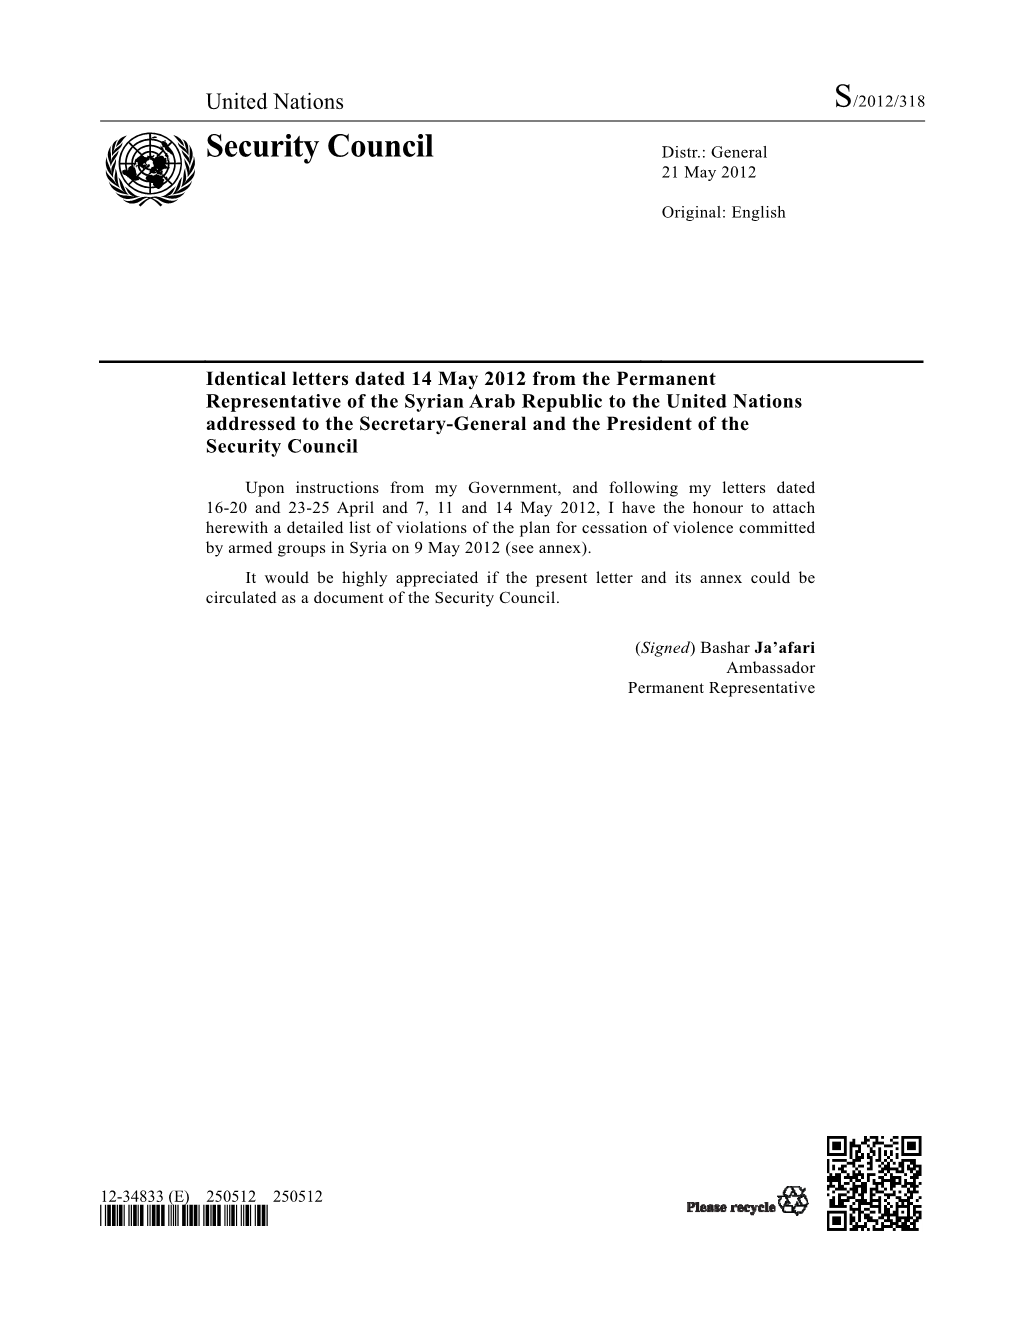 Security Council Distr.: General 21 May 2012